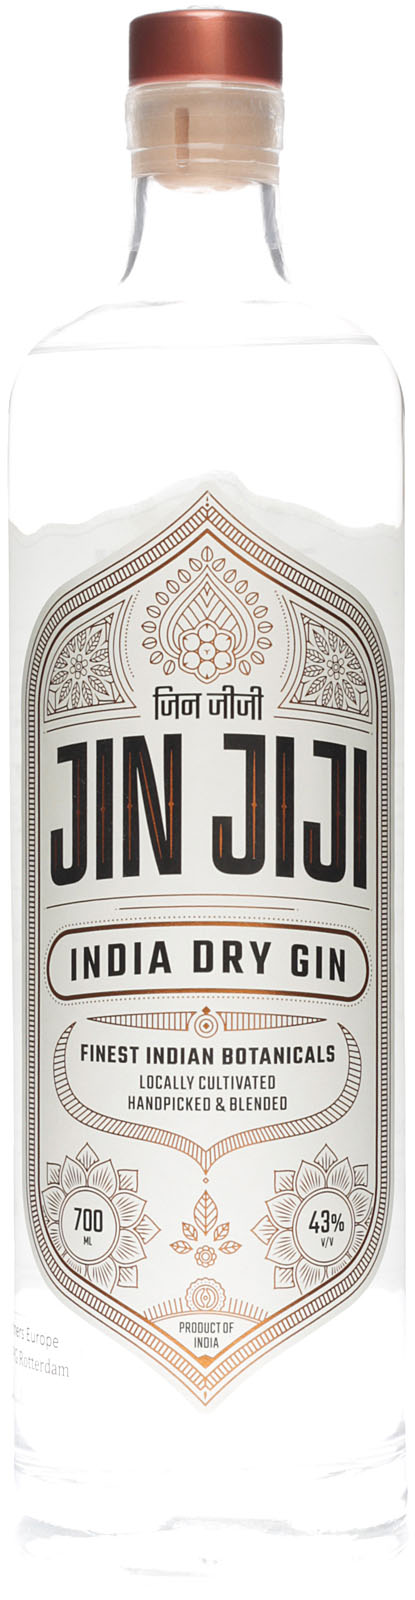 Jin JiJi India Dry Gin 43 Shop Liter 0,7 % kauf im Vol